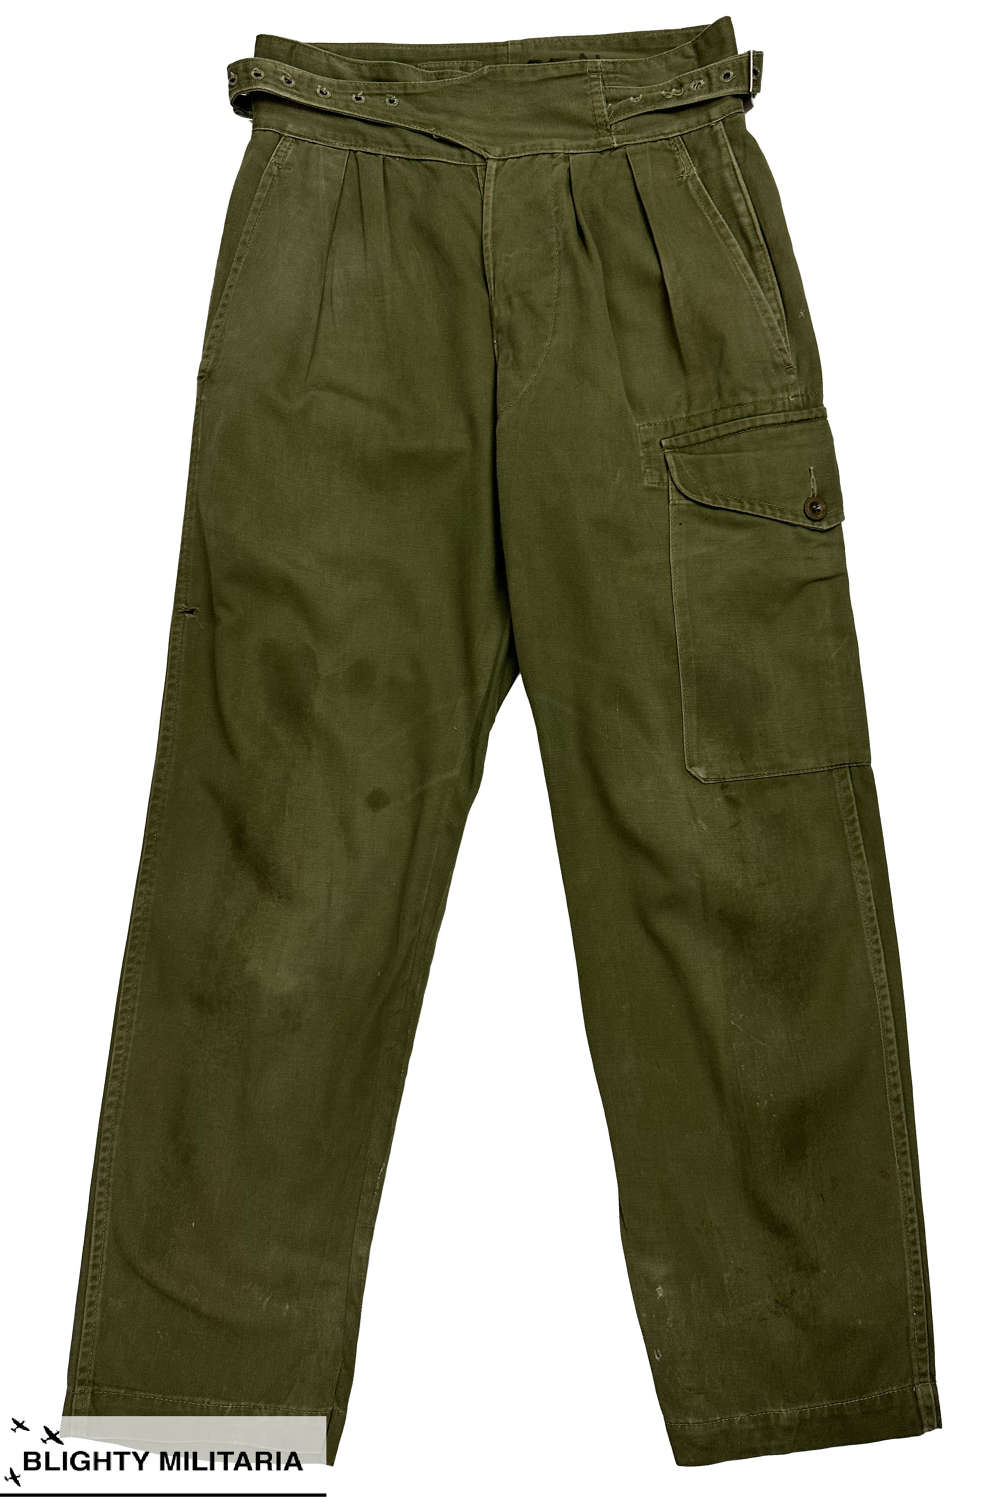 Original 1970s British Army 1950 Pattern Jungle Green Trousers Size 1